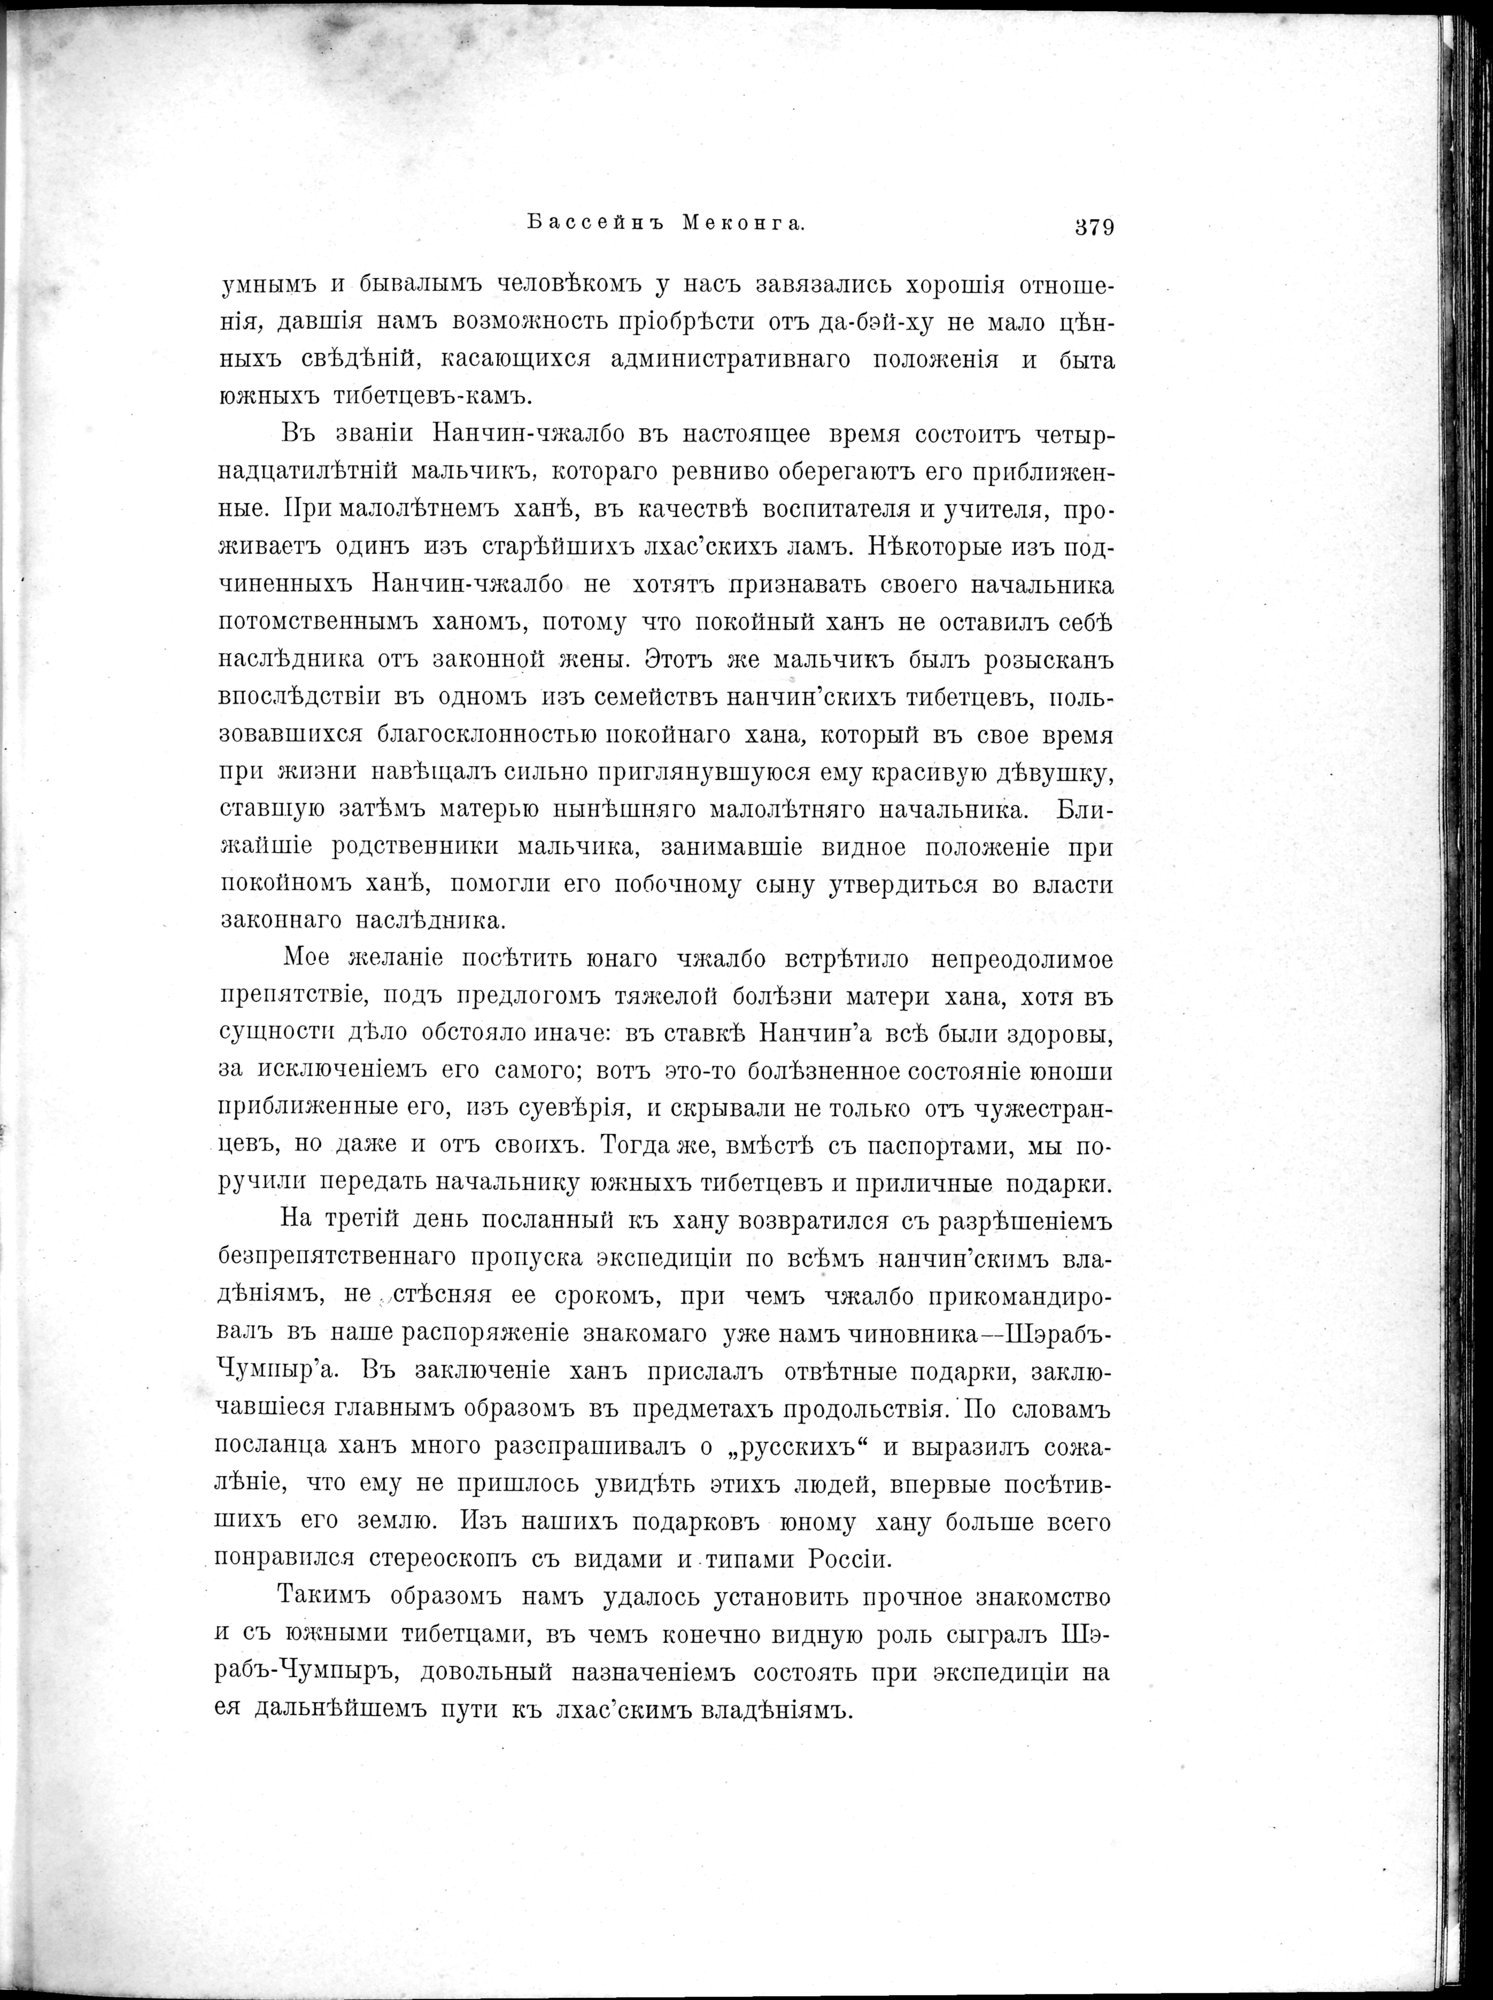 Mongoliia i Kam : vol.2 / Page 165 (Grayscale High Resolution Image)